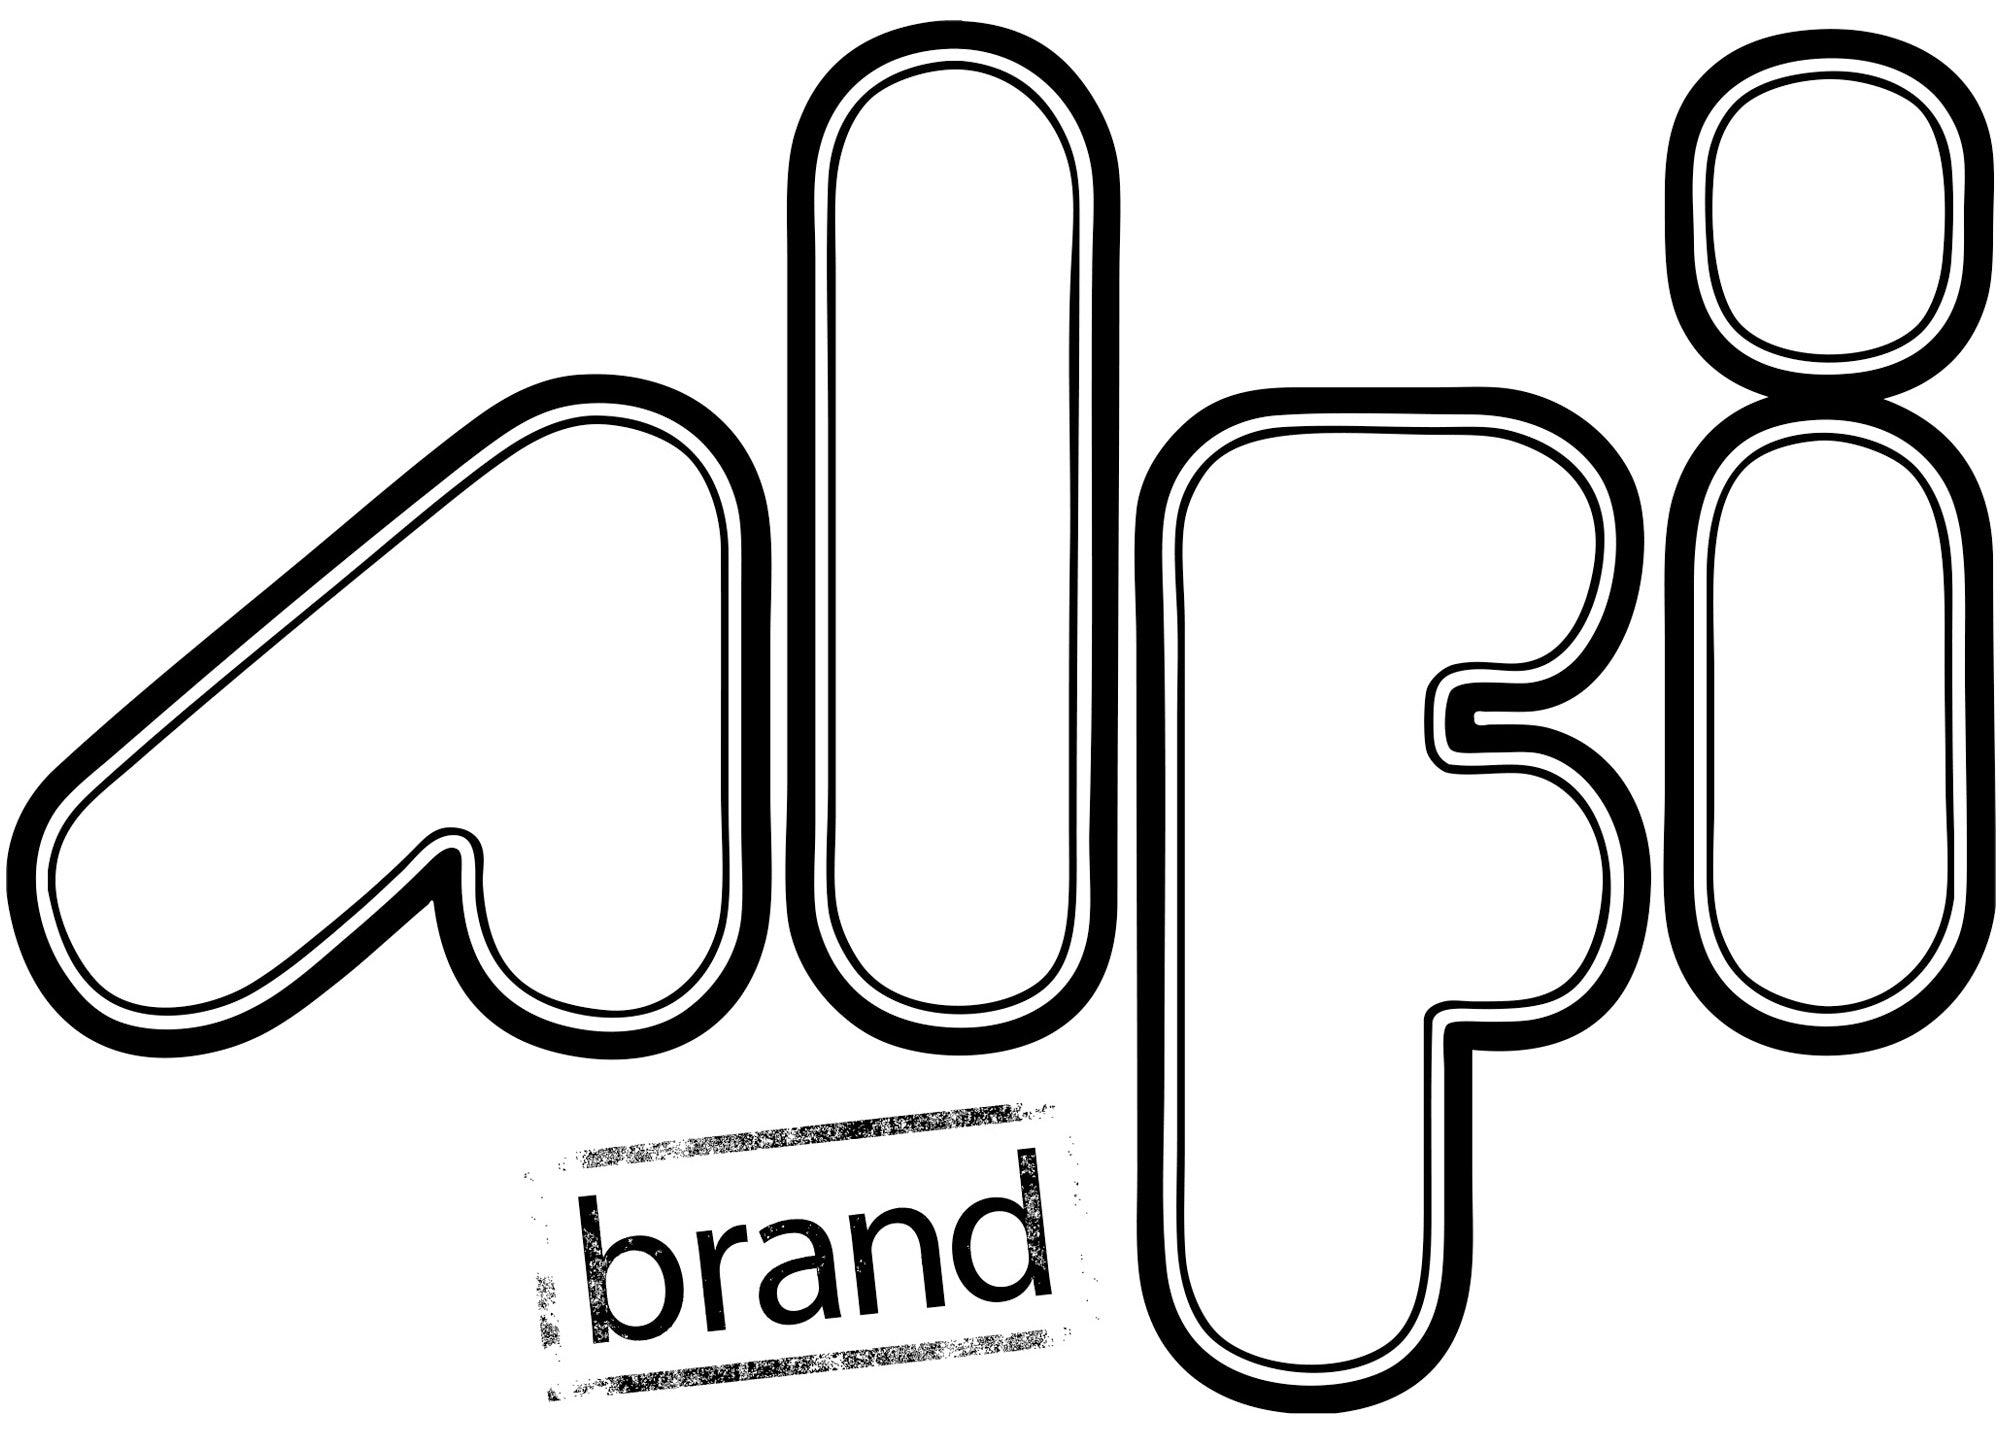 ALFI Brand - Brushed Nickel 6 Piece Matching Bathroom Accessory Set | AB9521-BN